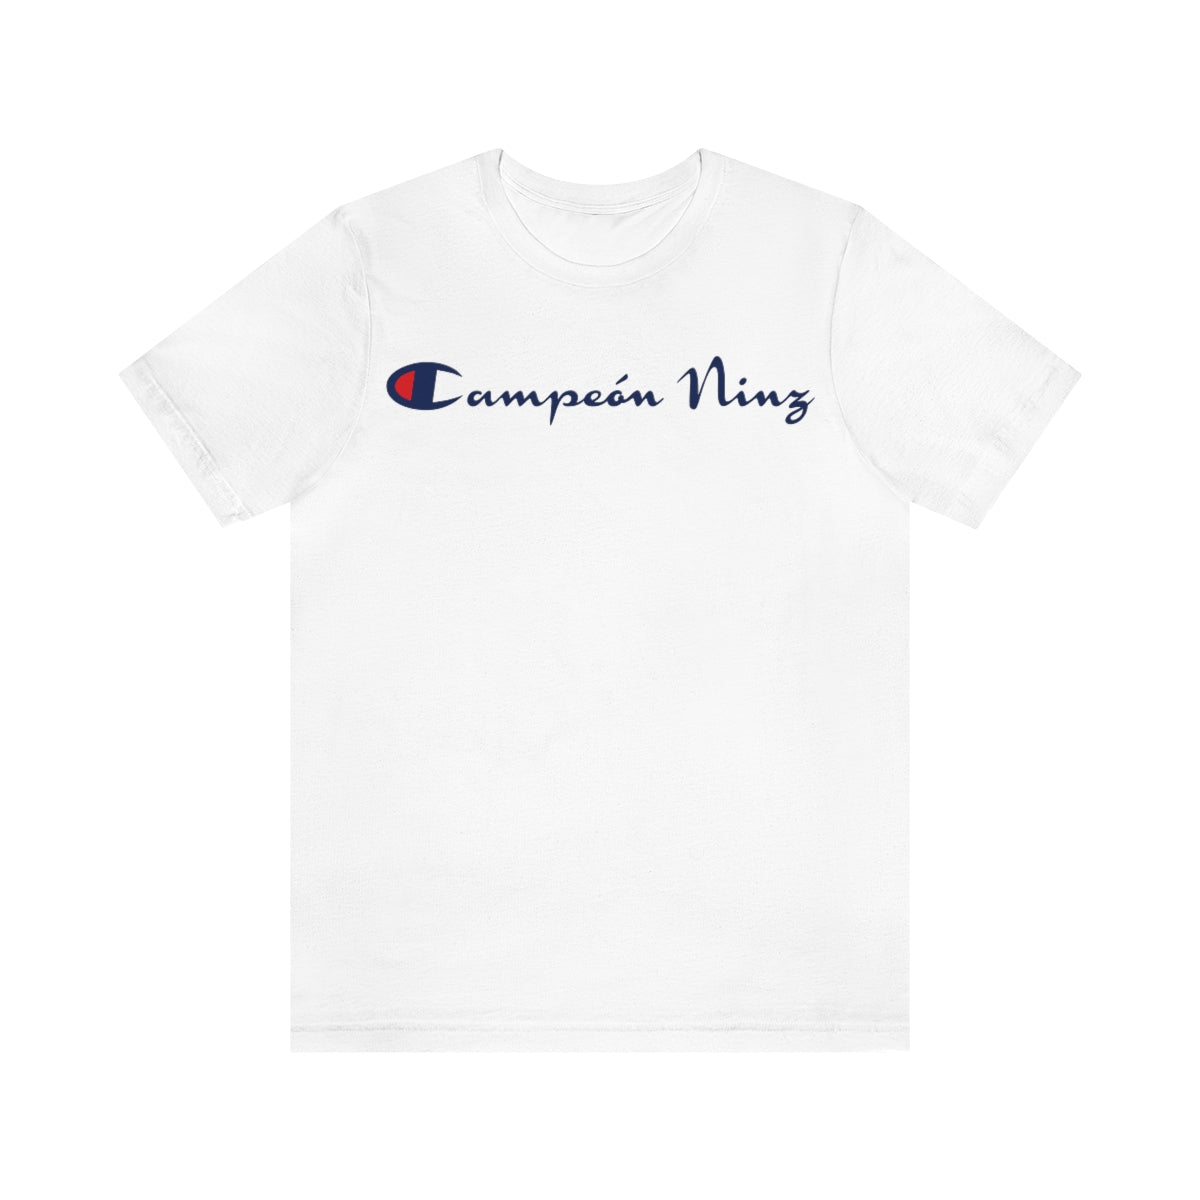 Champion Ninz™ WHITE T-shirt (Front)